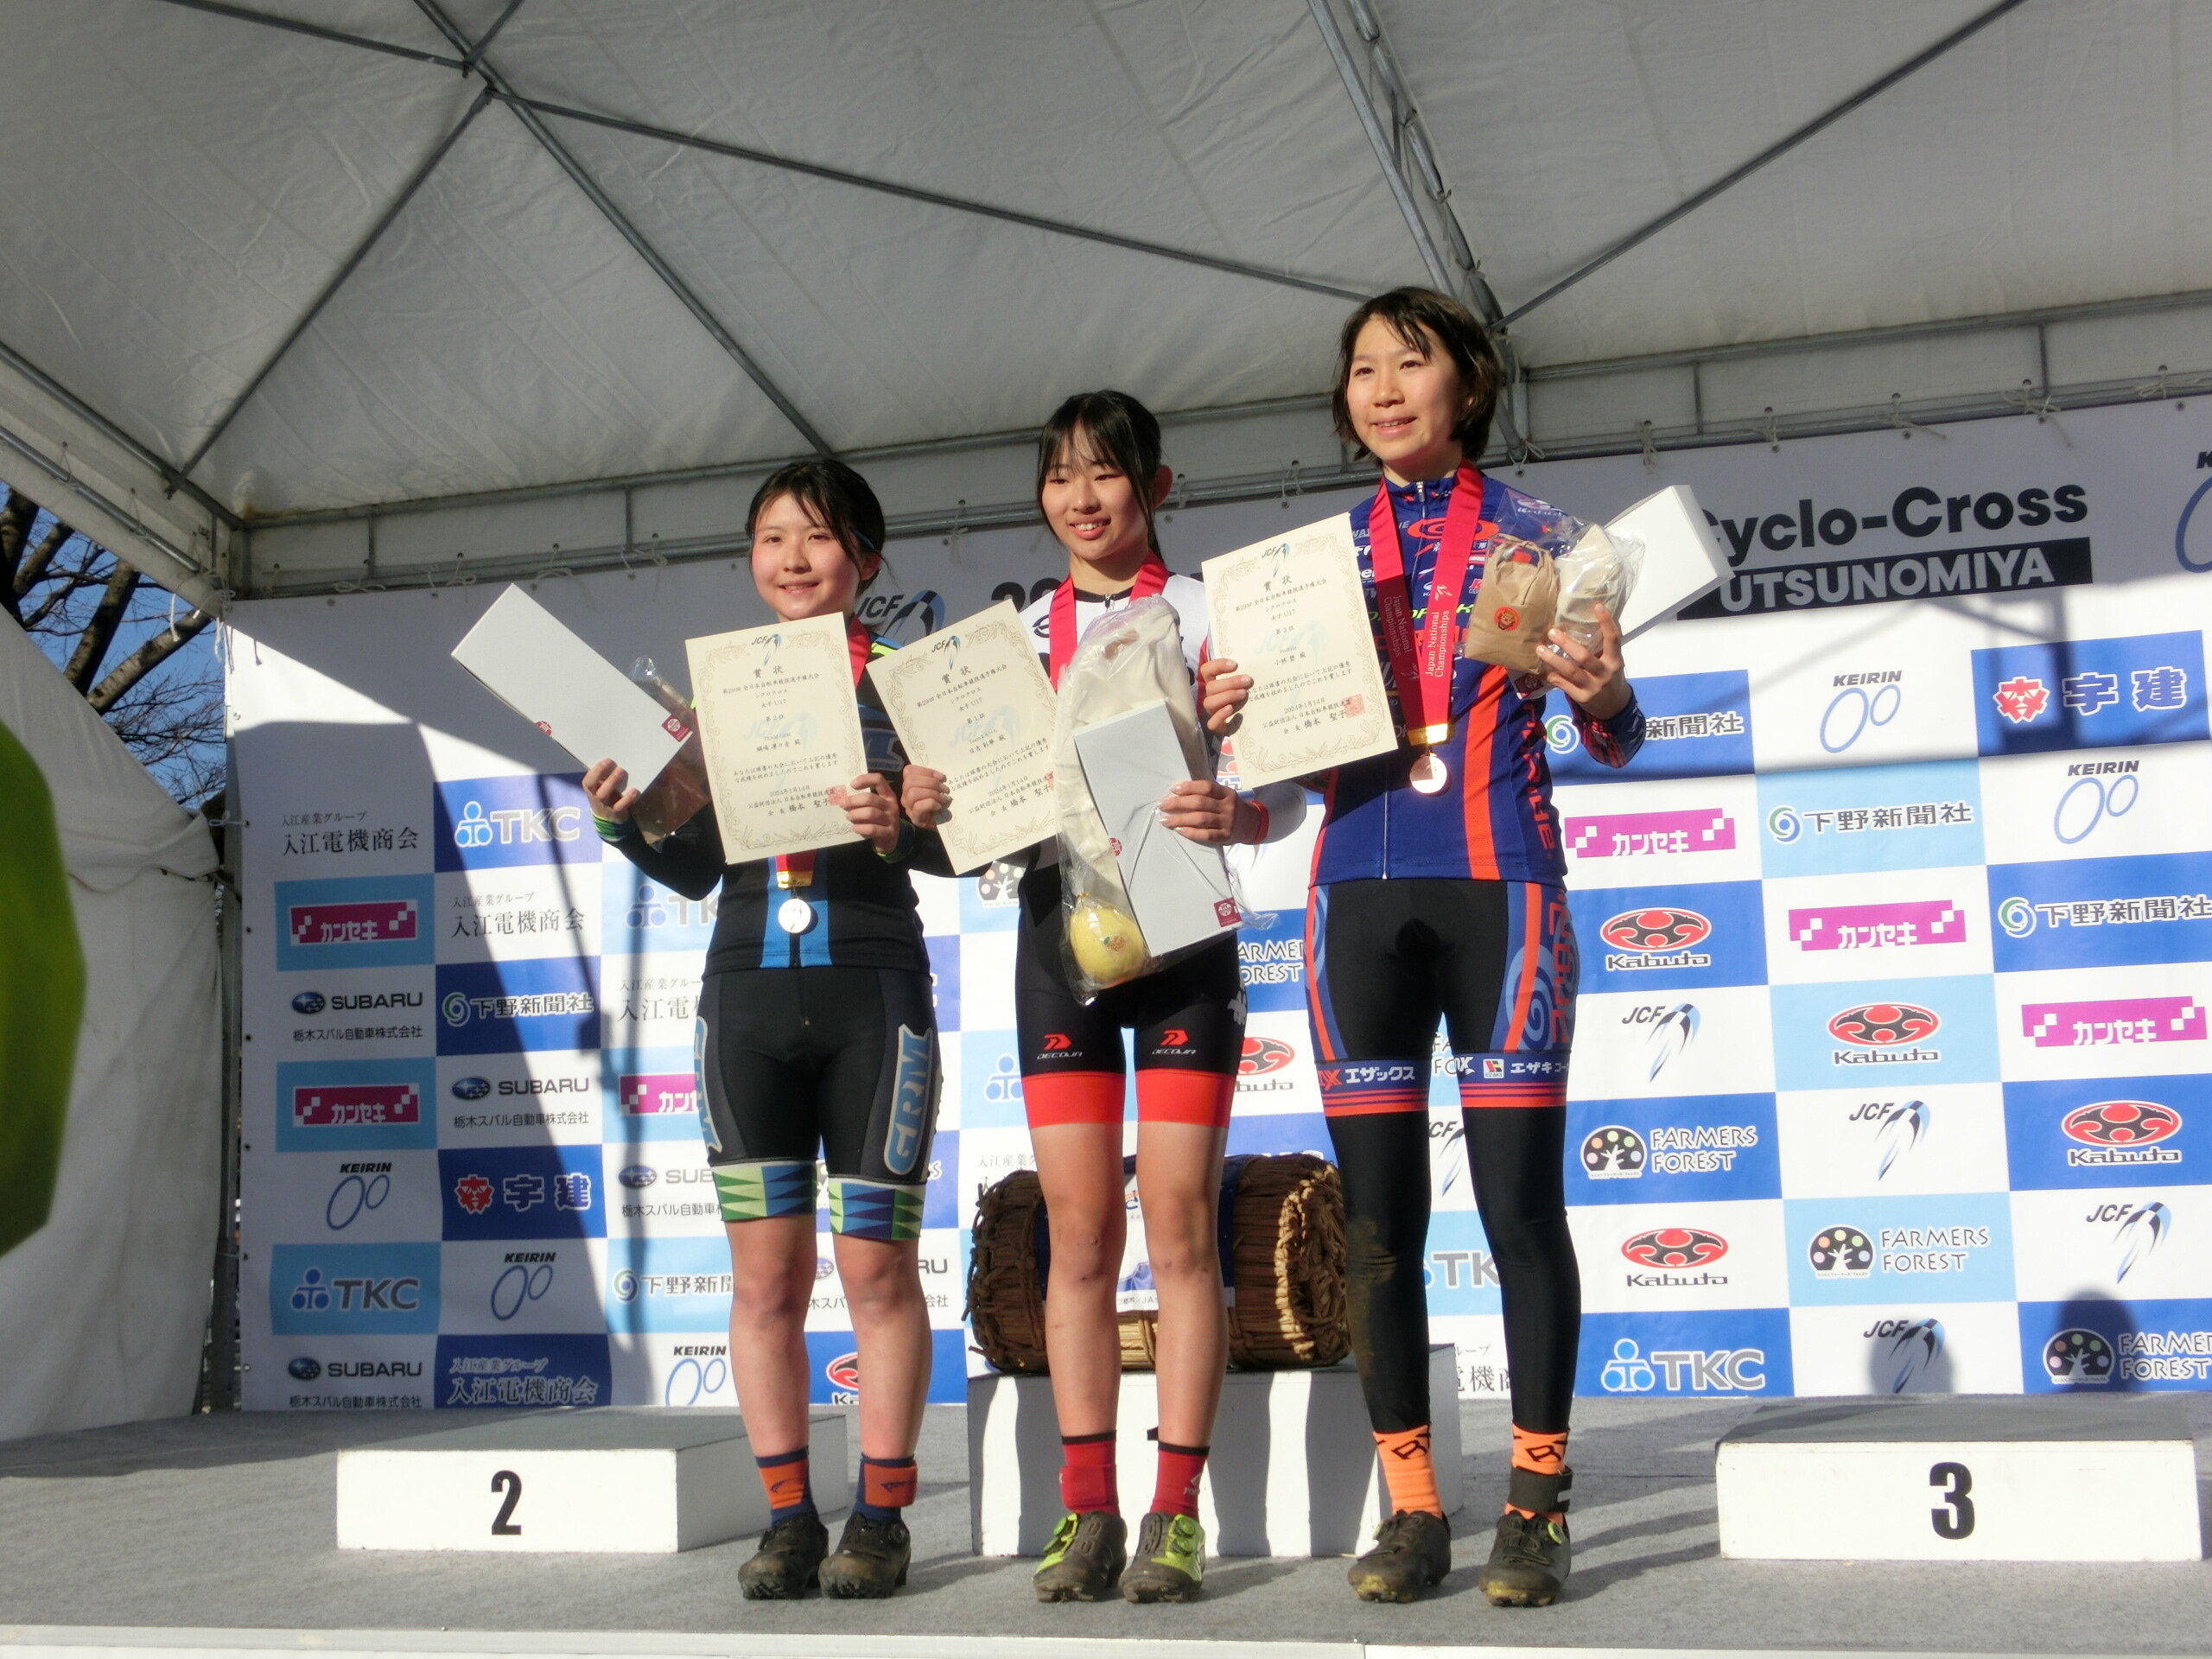 https://www.cyclocross.jp/news/CIMG8125.JPG